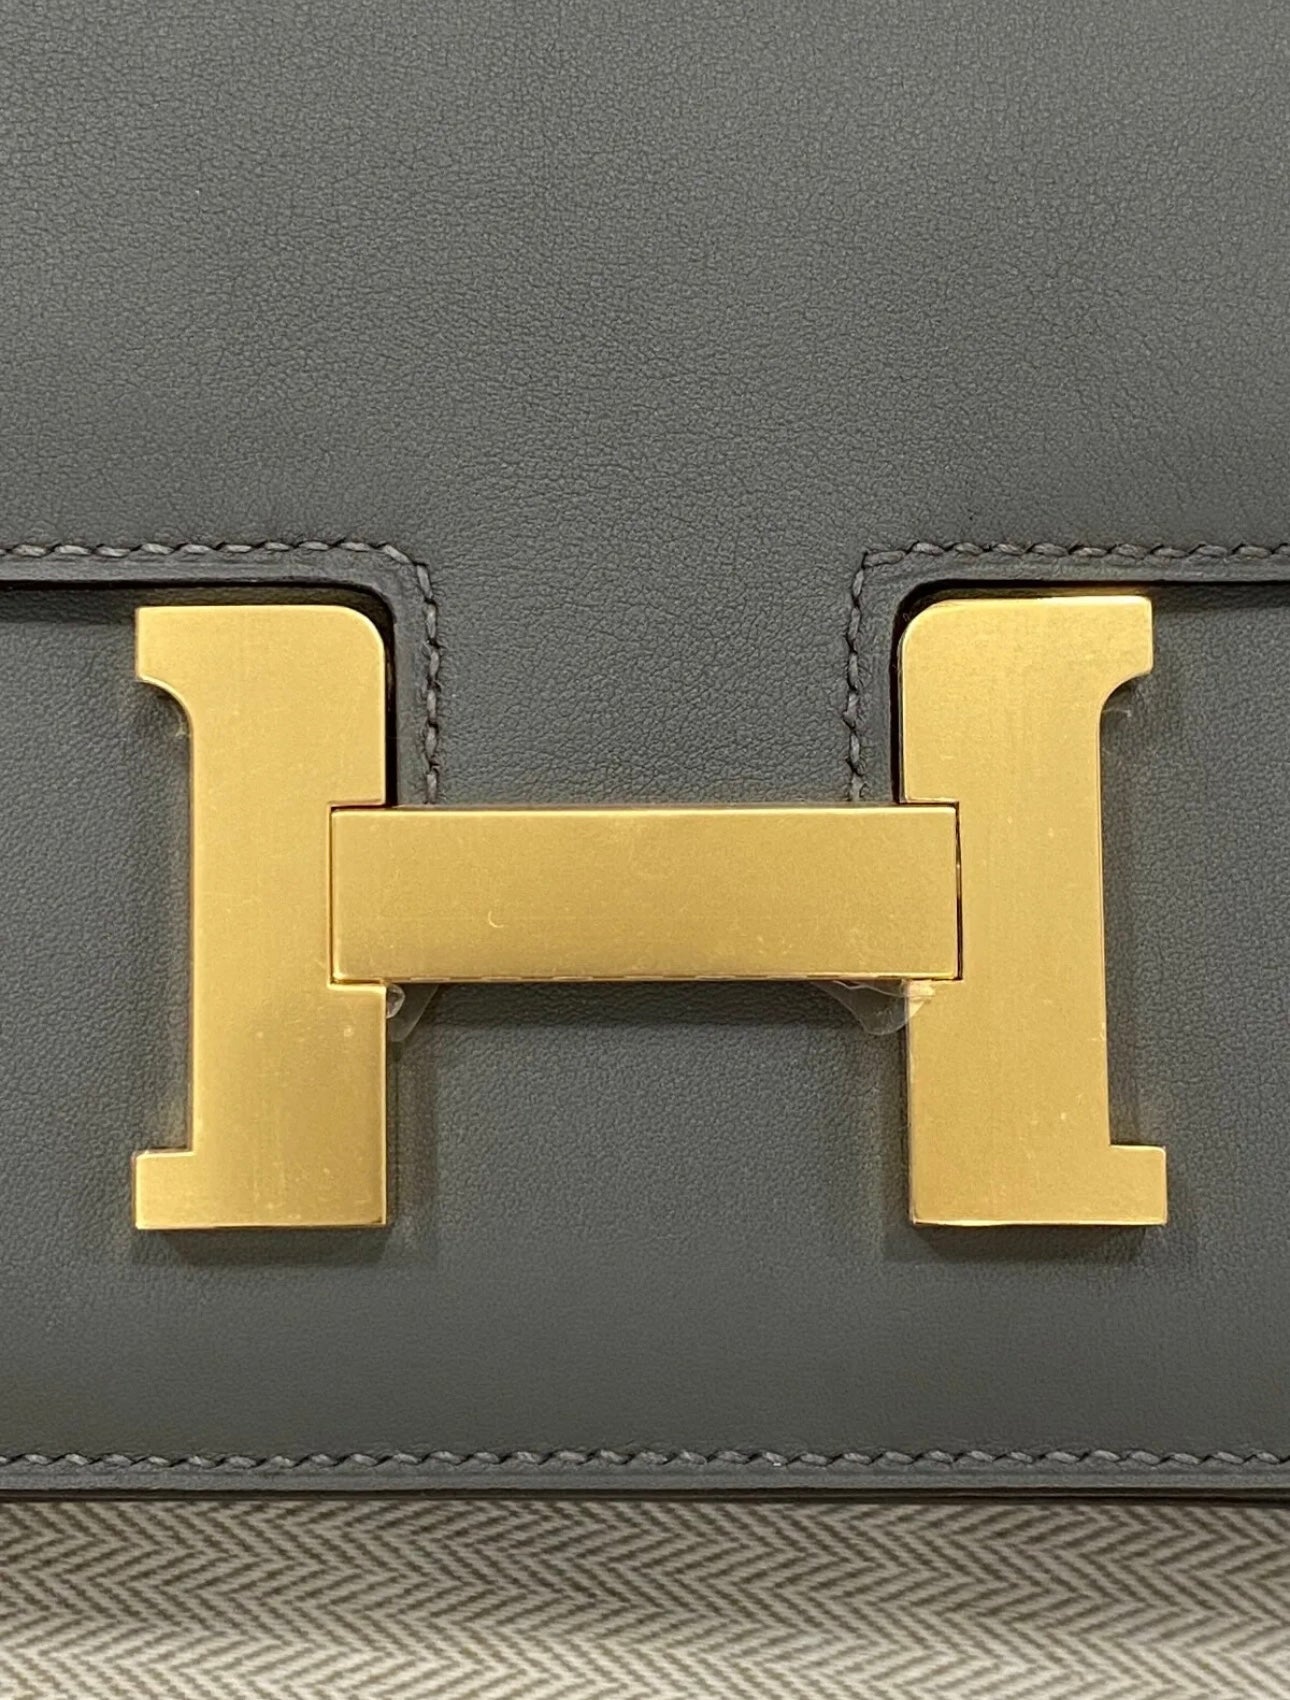 Hermes Constance Mini Bag Epsom Leather Gold Hardware In Grey